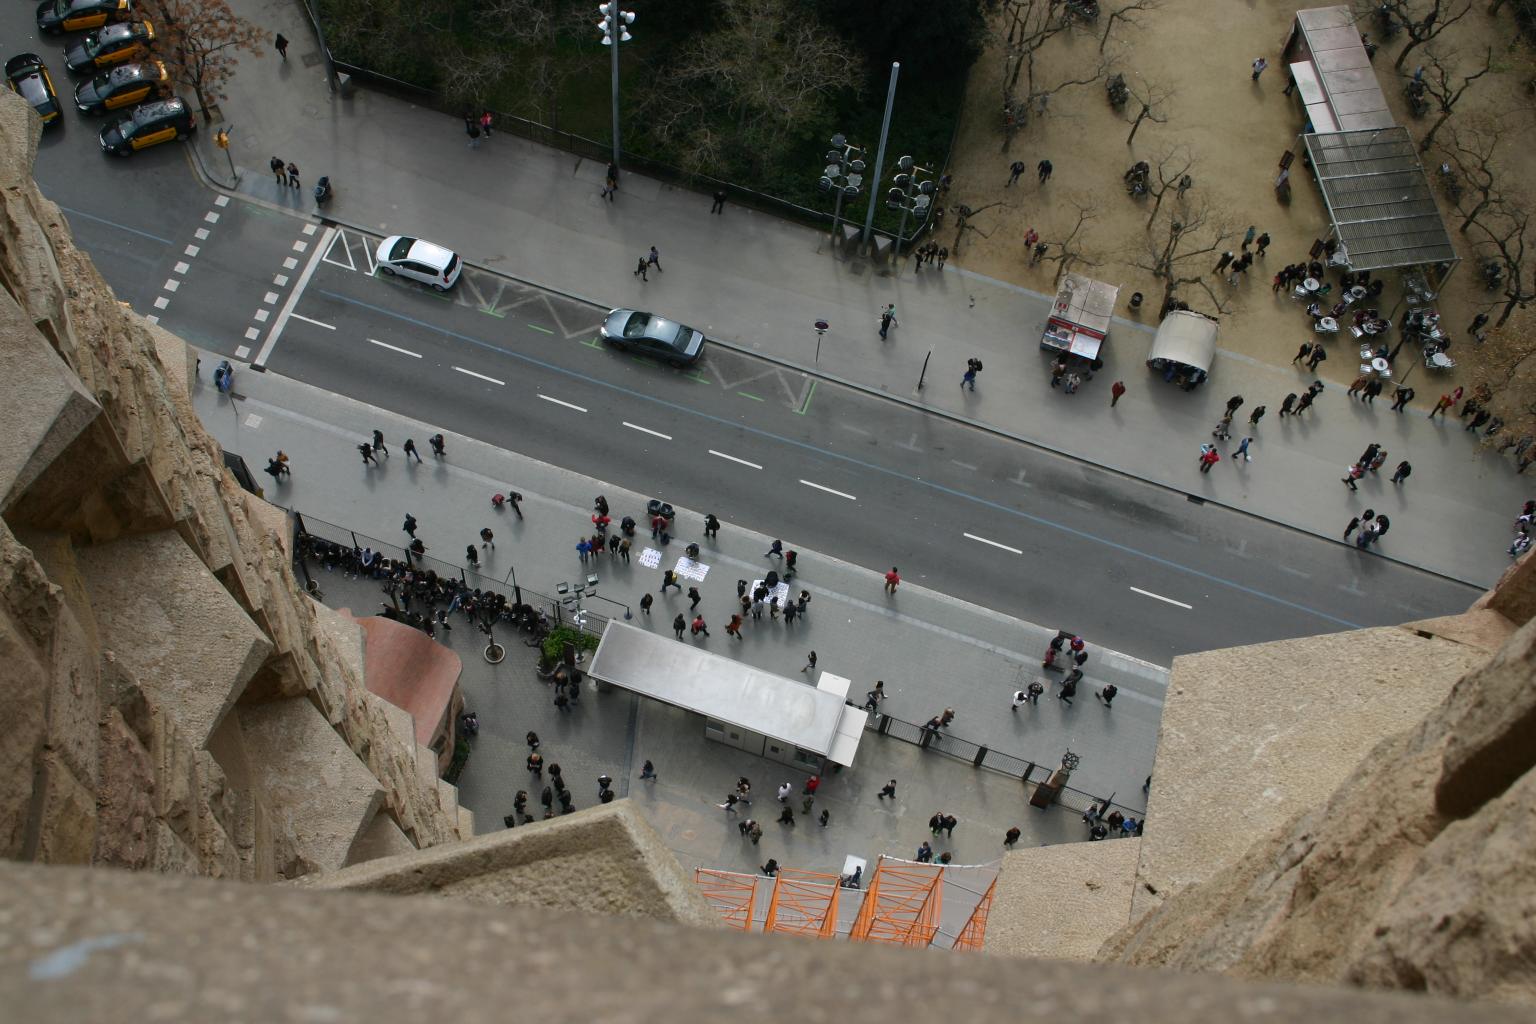 Monday 23rd March, view from a tower window of Gaudi's La Sagrada Familia, Barcelona.